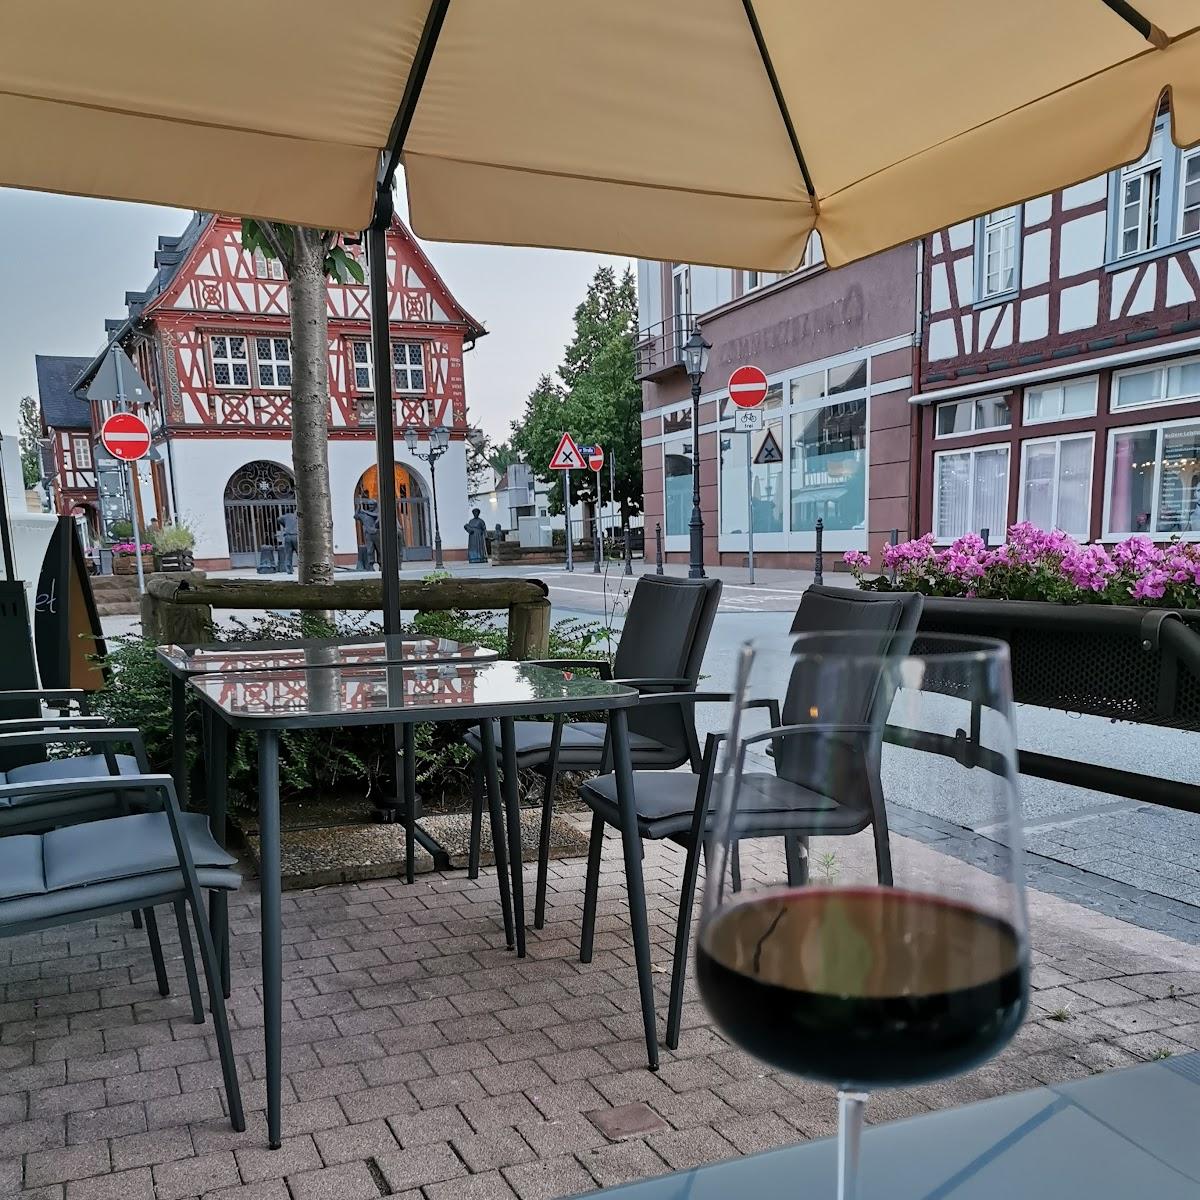 Restaurant "Weinbar Pizarro" in Groß-Gerau